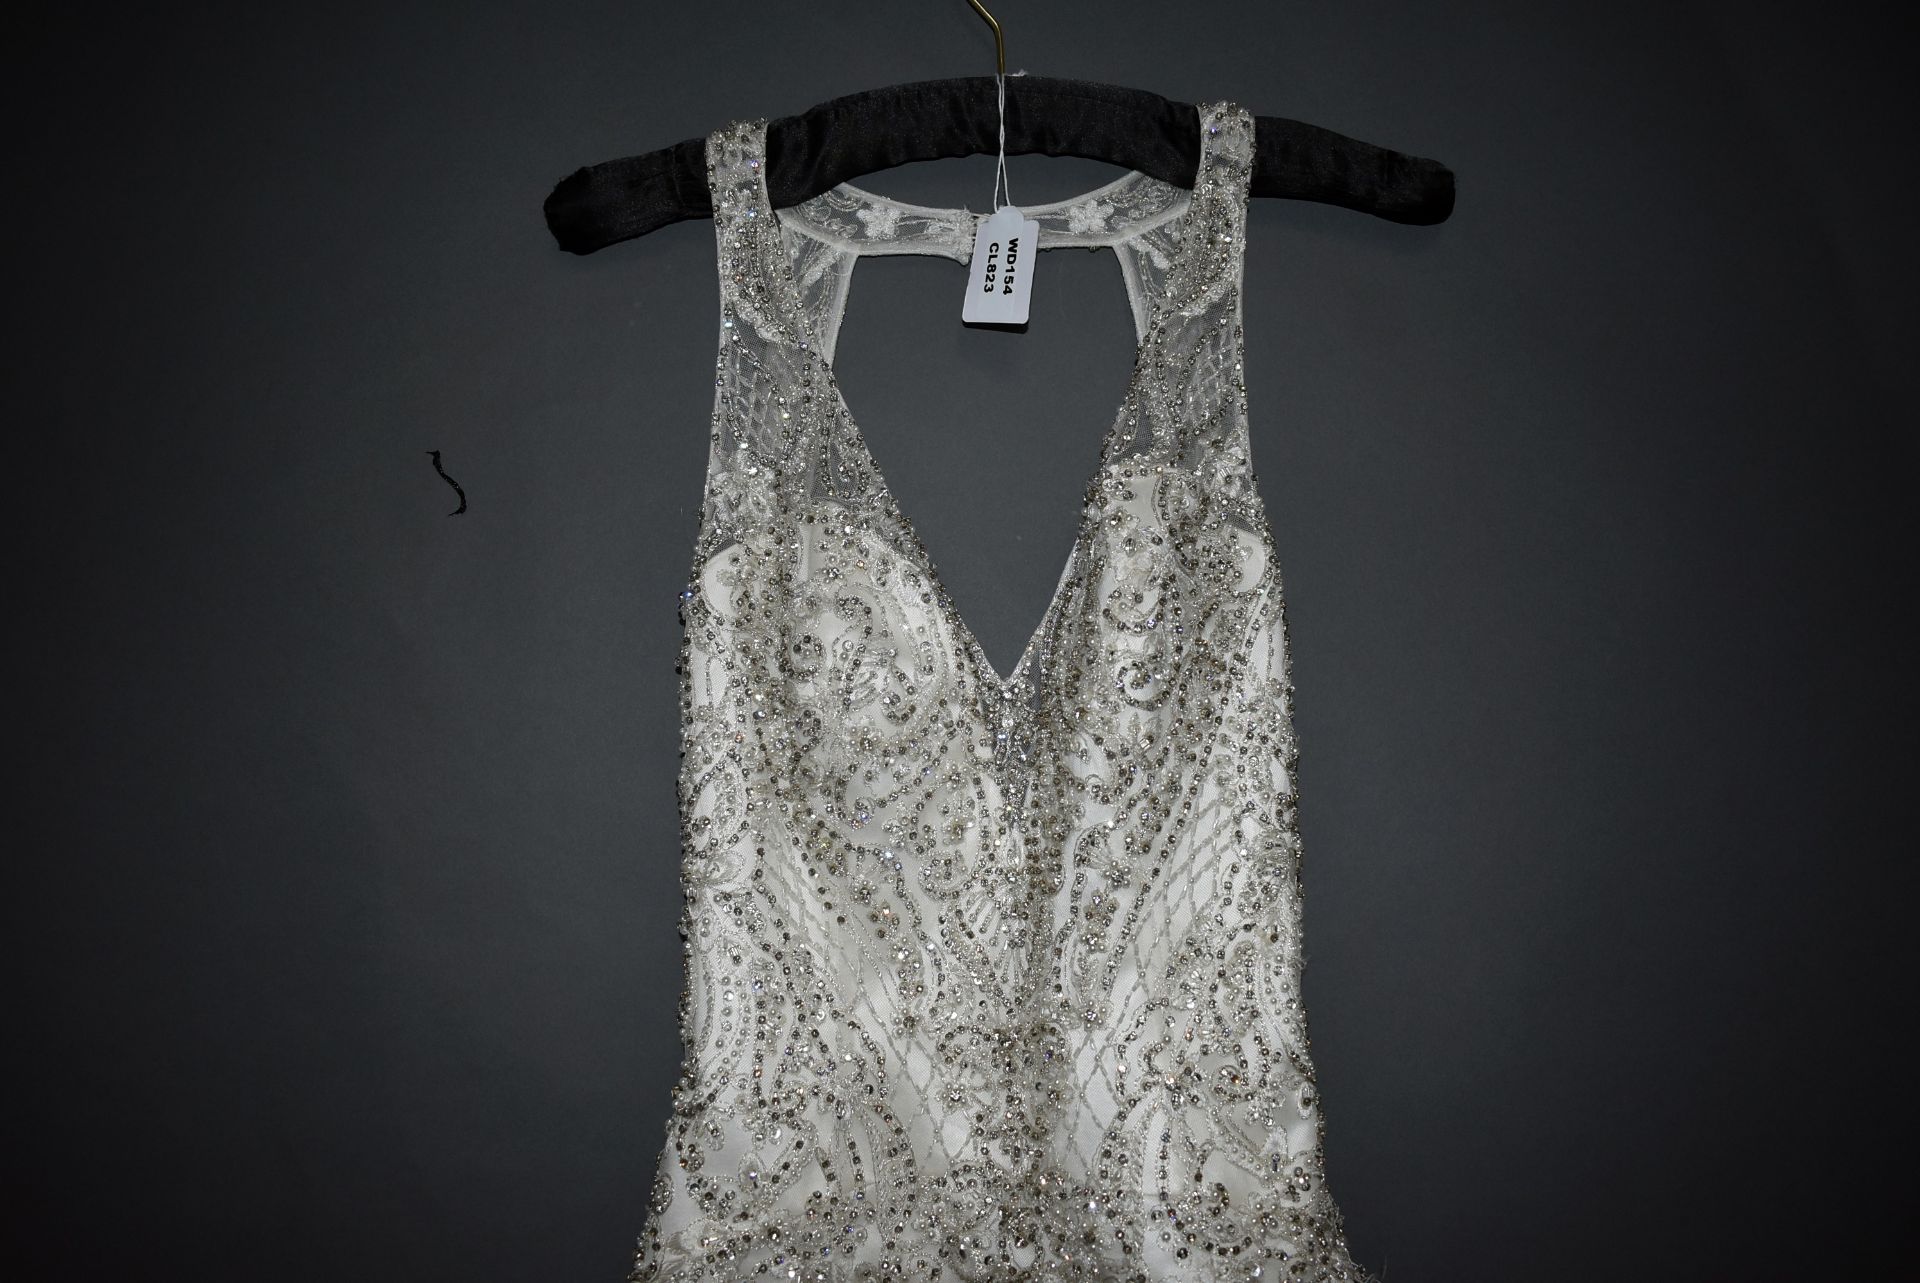 1 x MORI LEE Lace & Satin Beaded Bodice Fishtail Designer Wedding Dress Bridal Gown RRP £1,000 UK 12 - Image 3 of 6